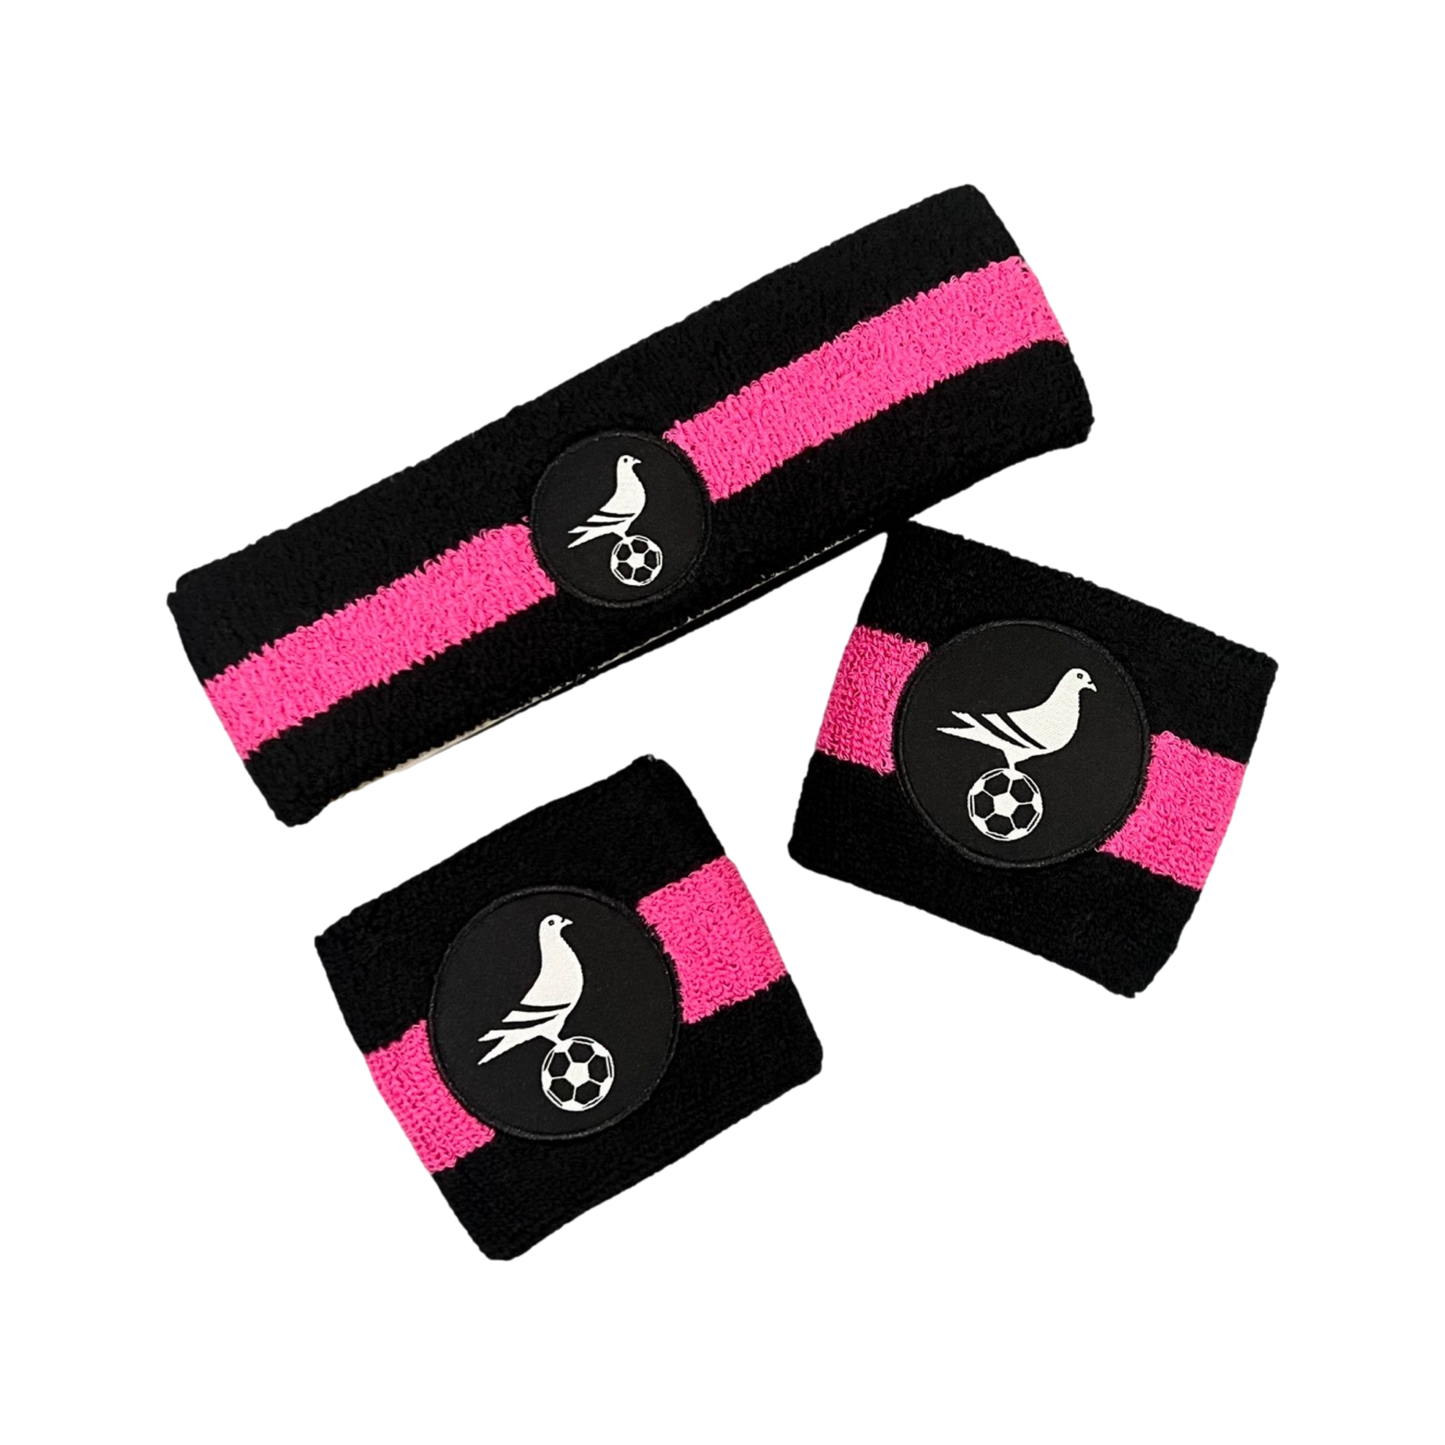 Black and Pink Sweatband Set